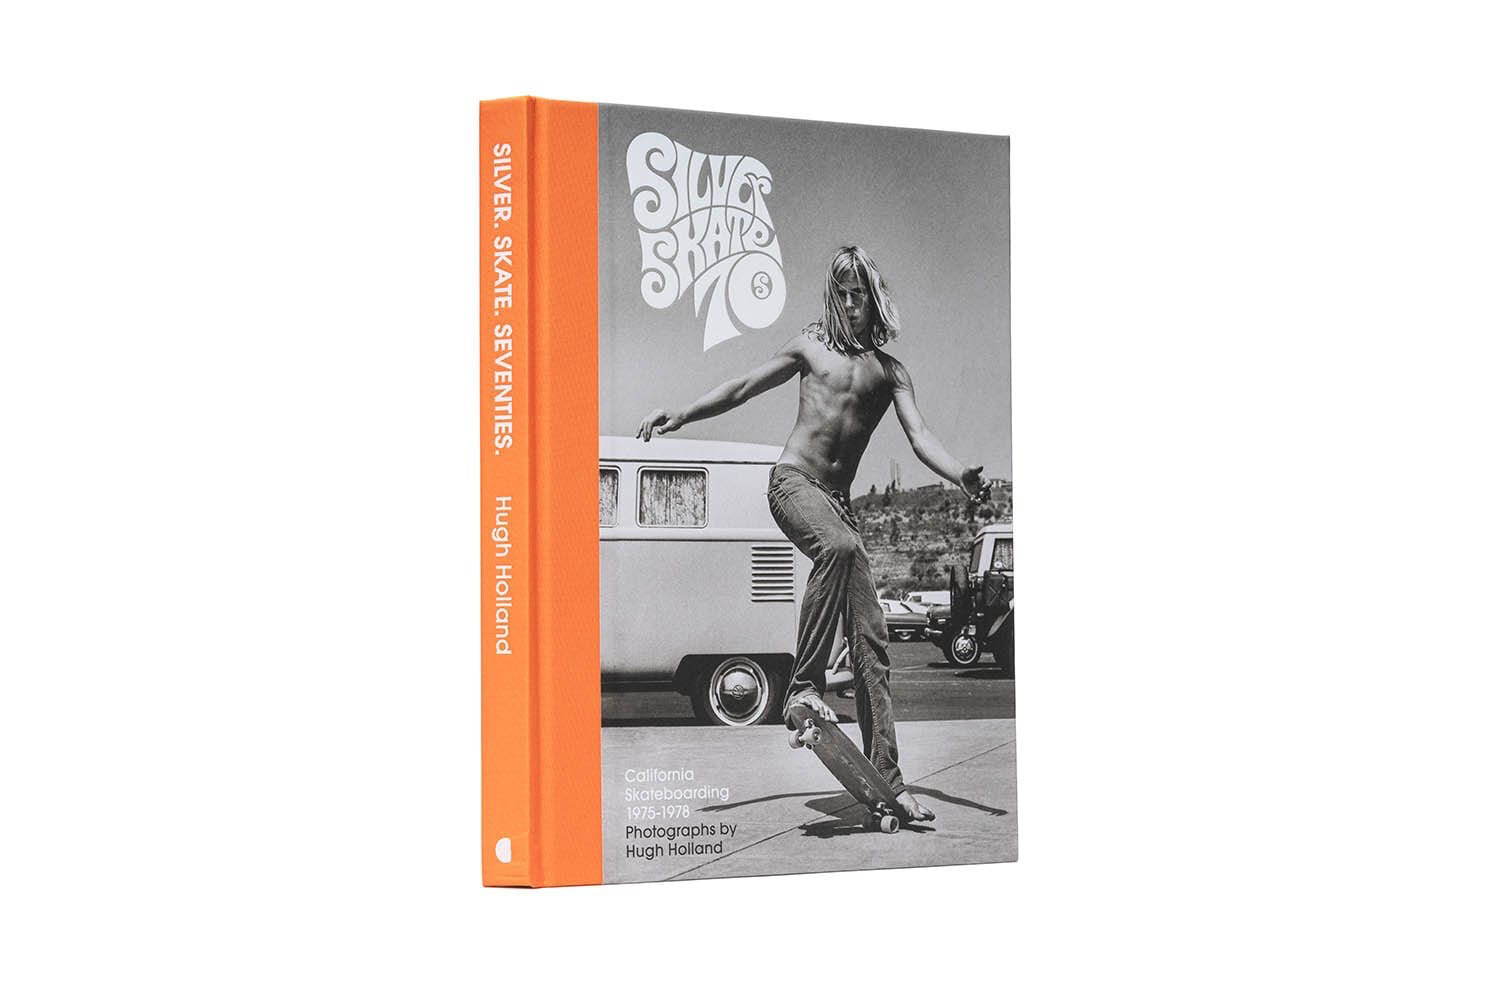 Silver. Skate. Seventies By Hugh Holland